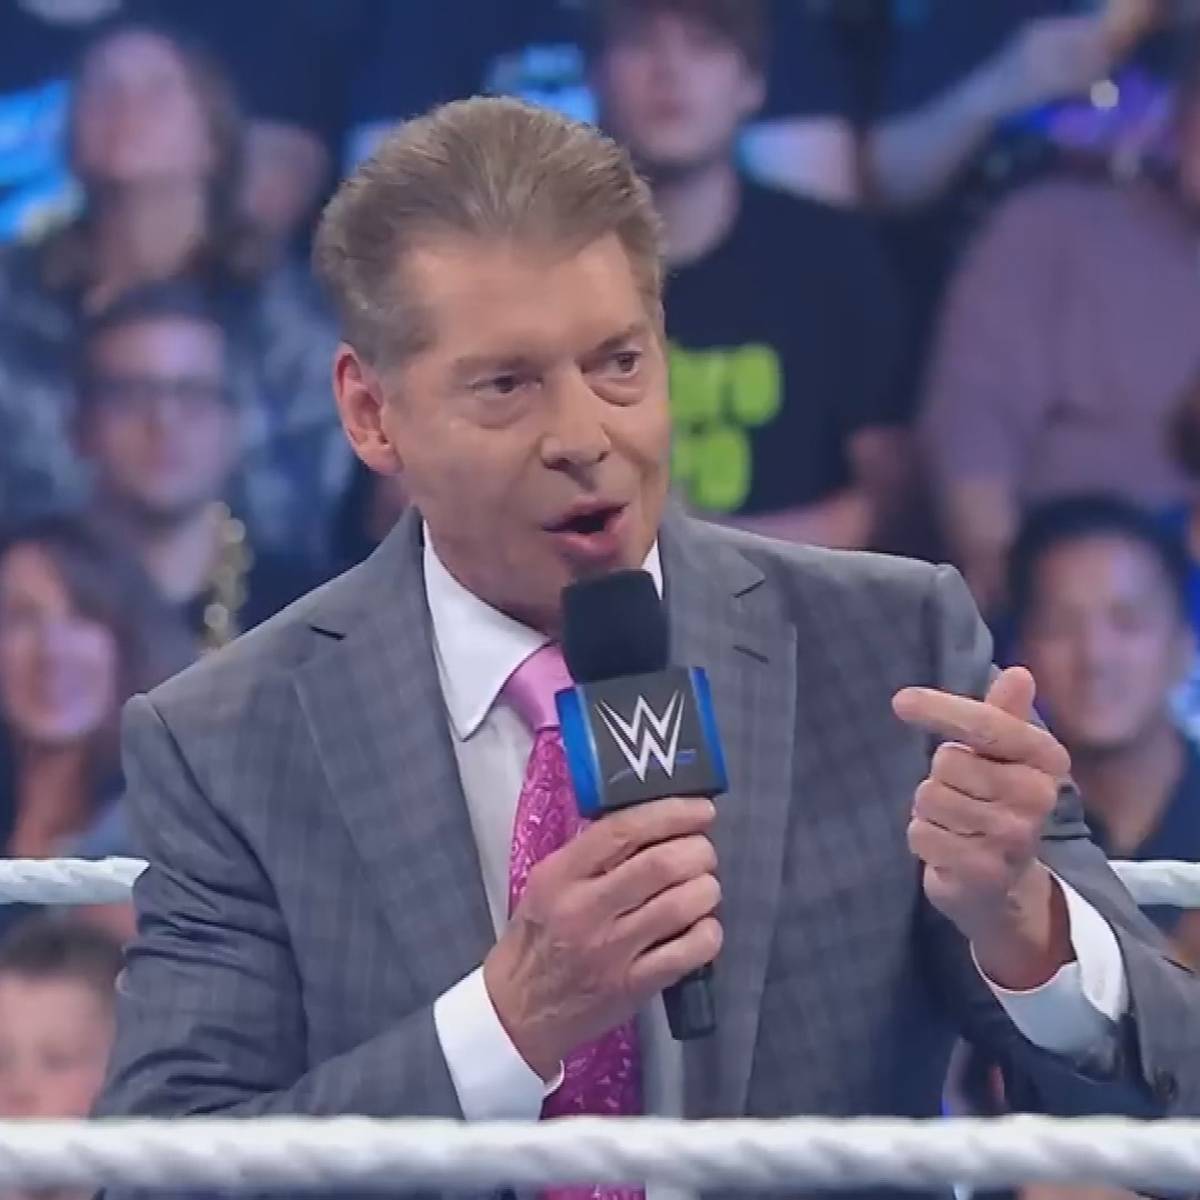 So lief der TV-Auftritt des WWE-Bosses nach dem Sex-Skandal